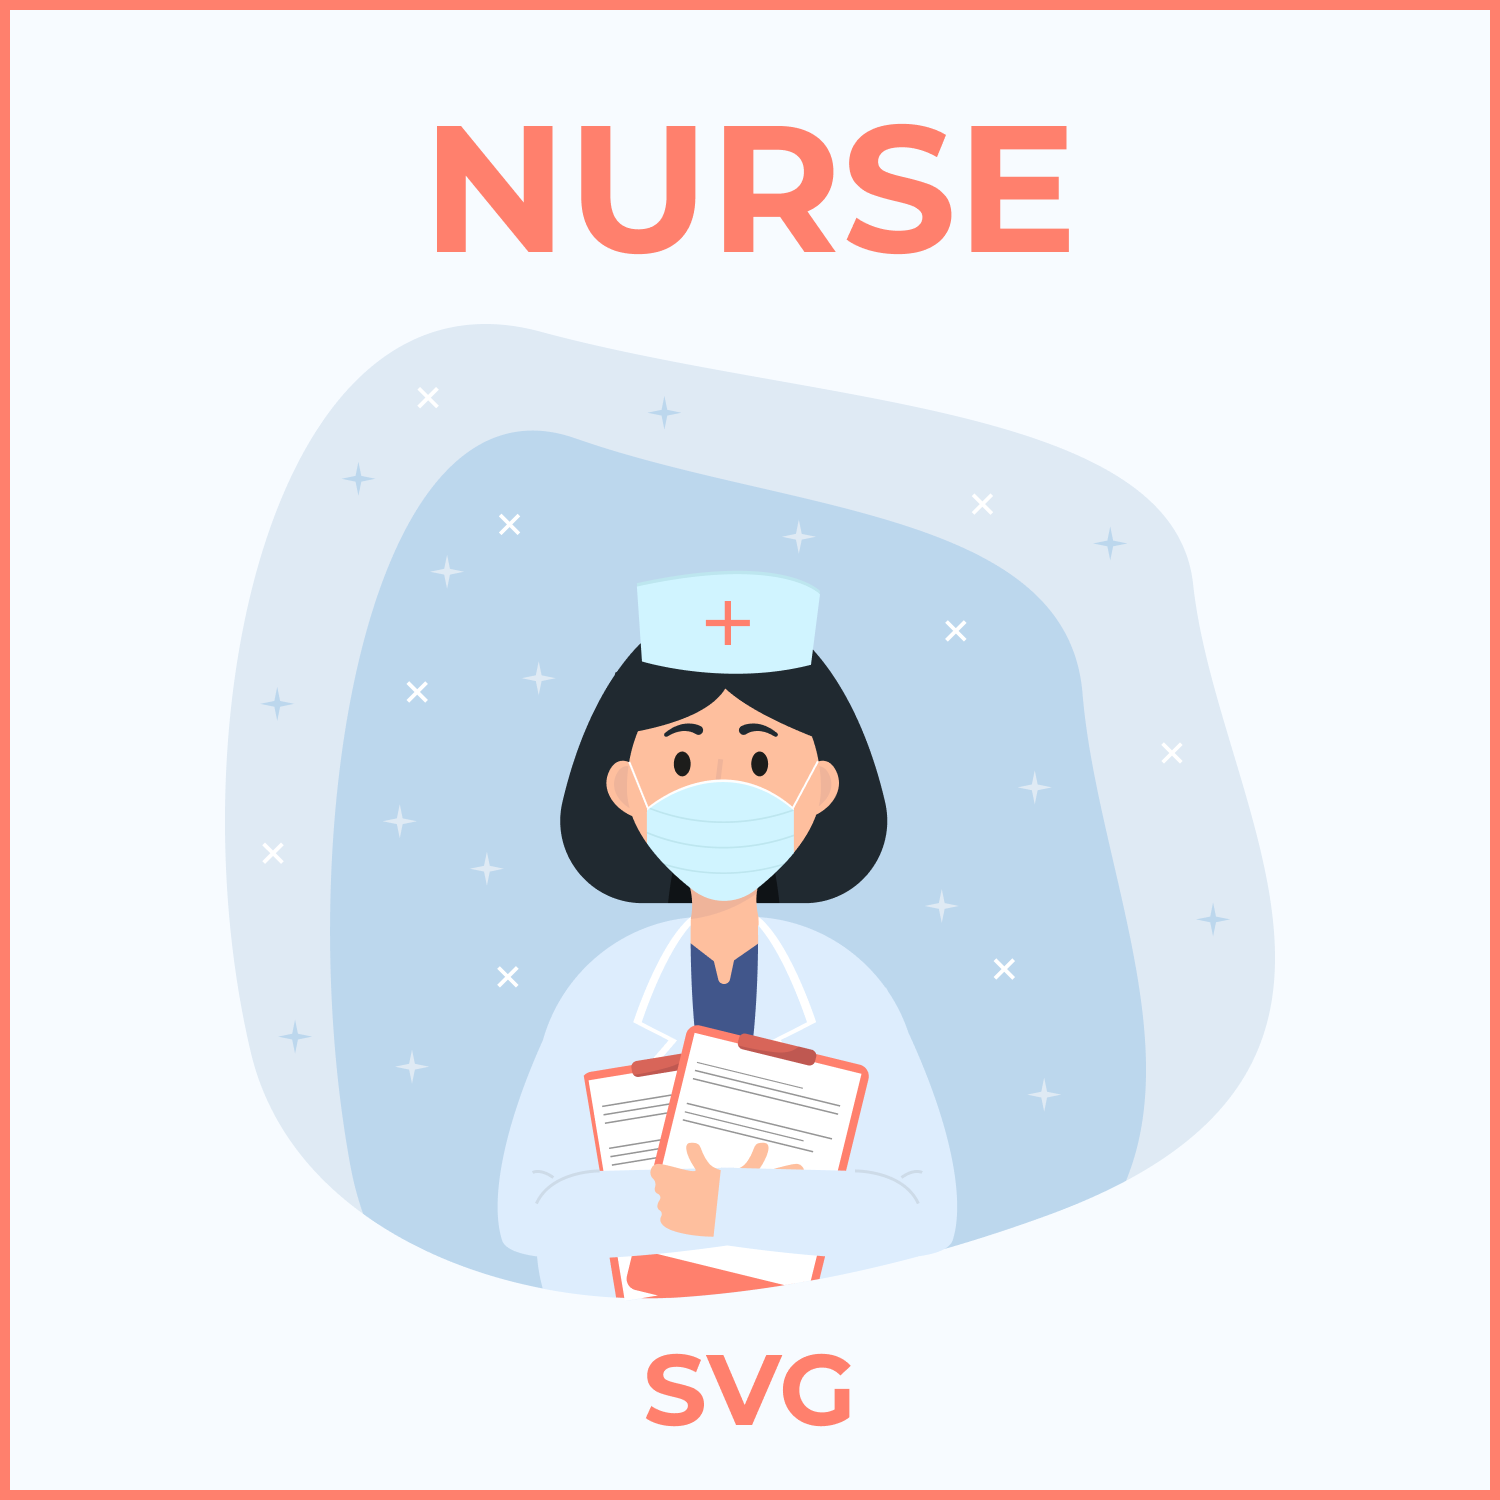 nurse svg files pack cover image.